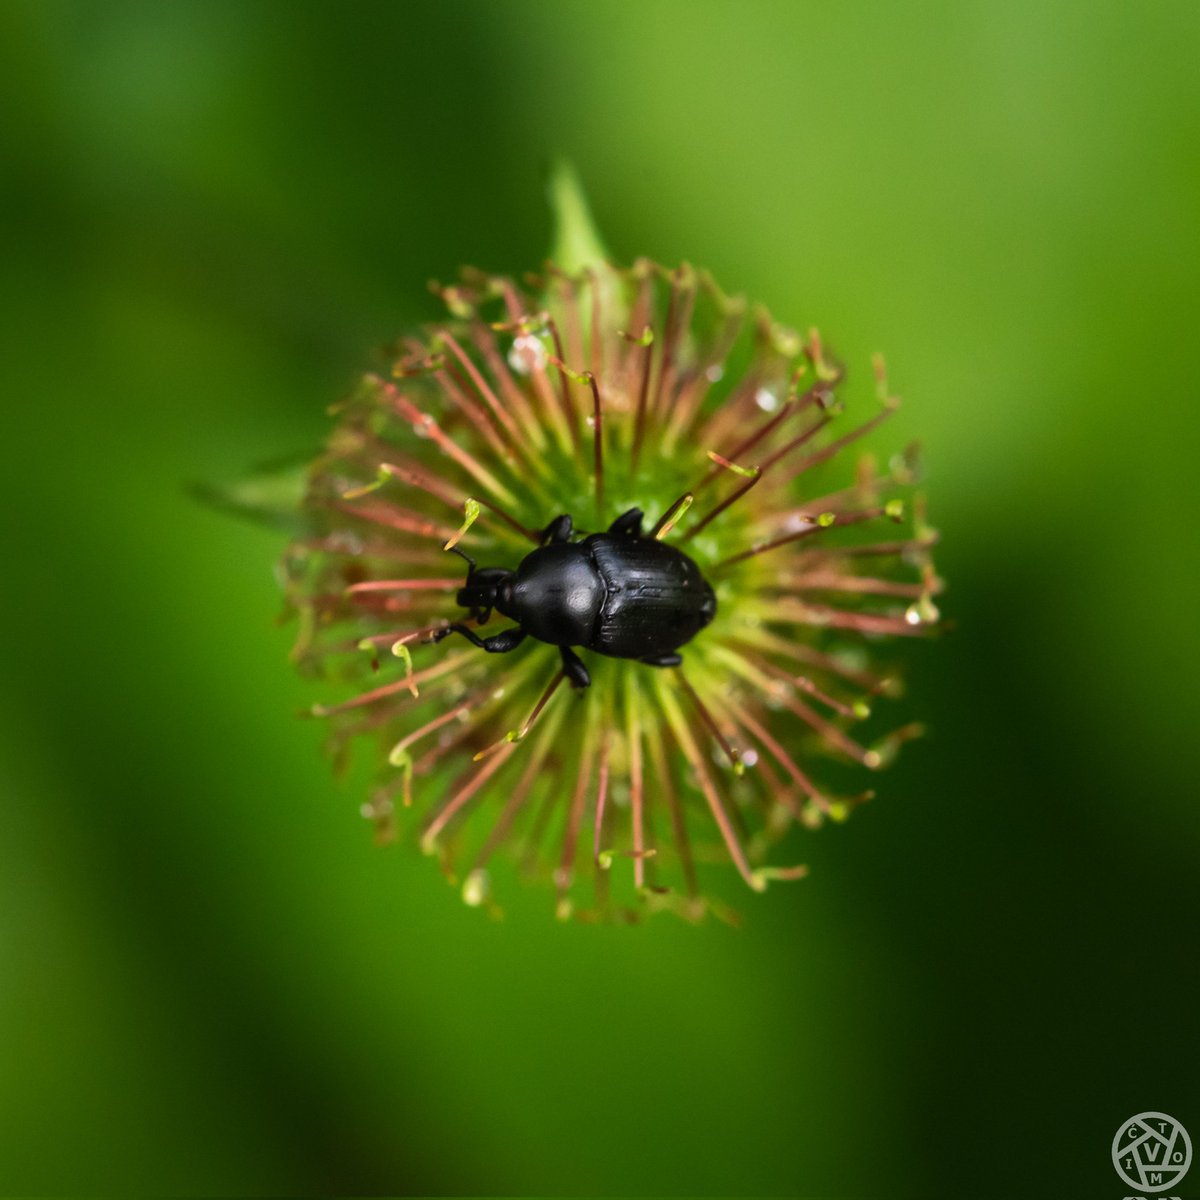 A bug on a flower

#nature #ig_nature #rsa_nature #bugs #ig_bugs #rsa_bugs #insects #ig_insects #rsa_insects #flowers #ig_flowers #rsa_flowers #rsa_main #outdoors #inlovewithnature #naturelovers #closeup #royalsnappingartists